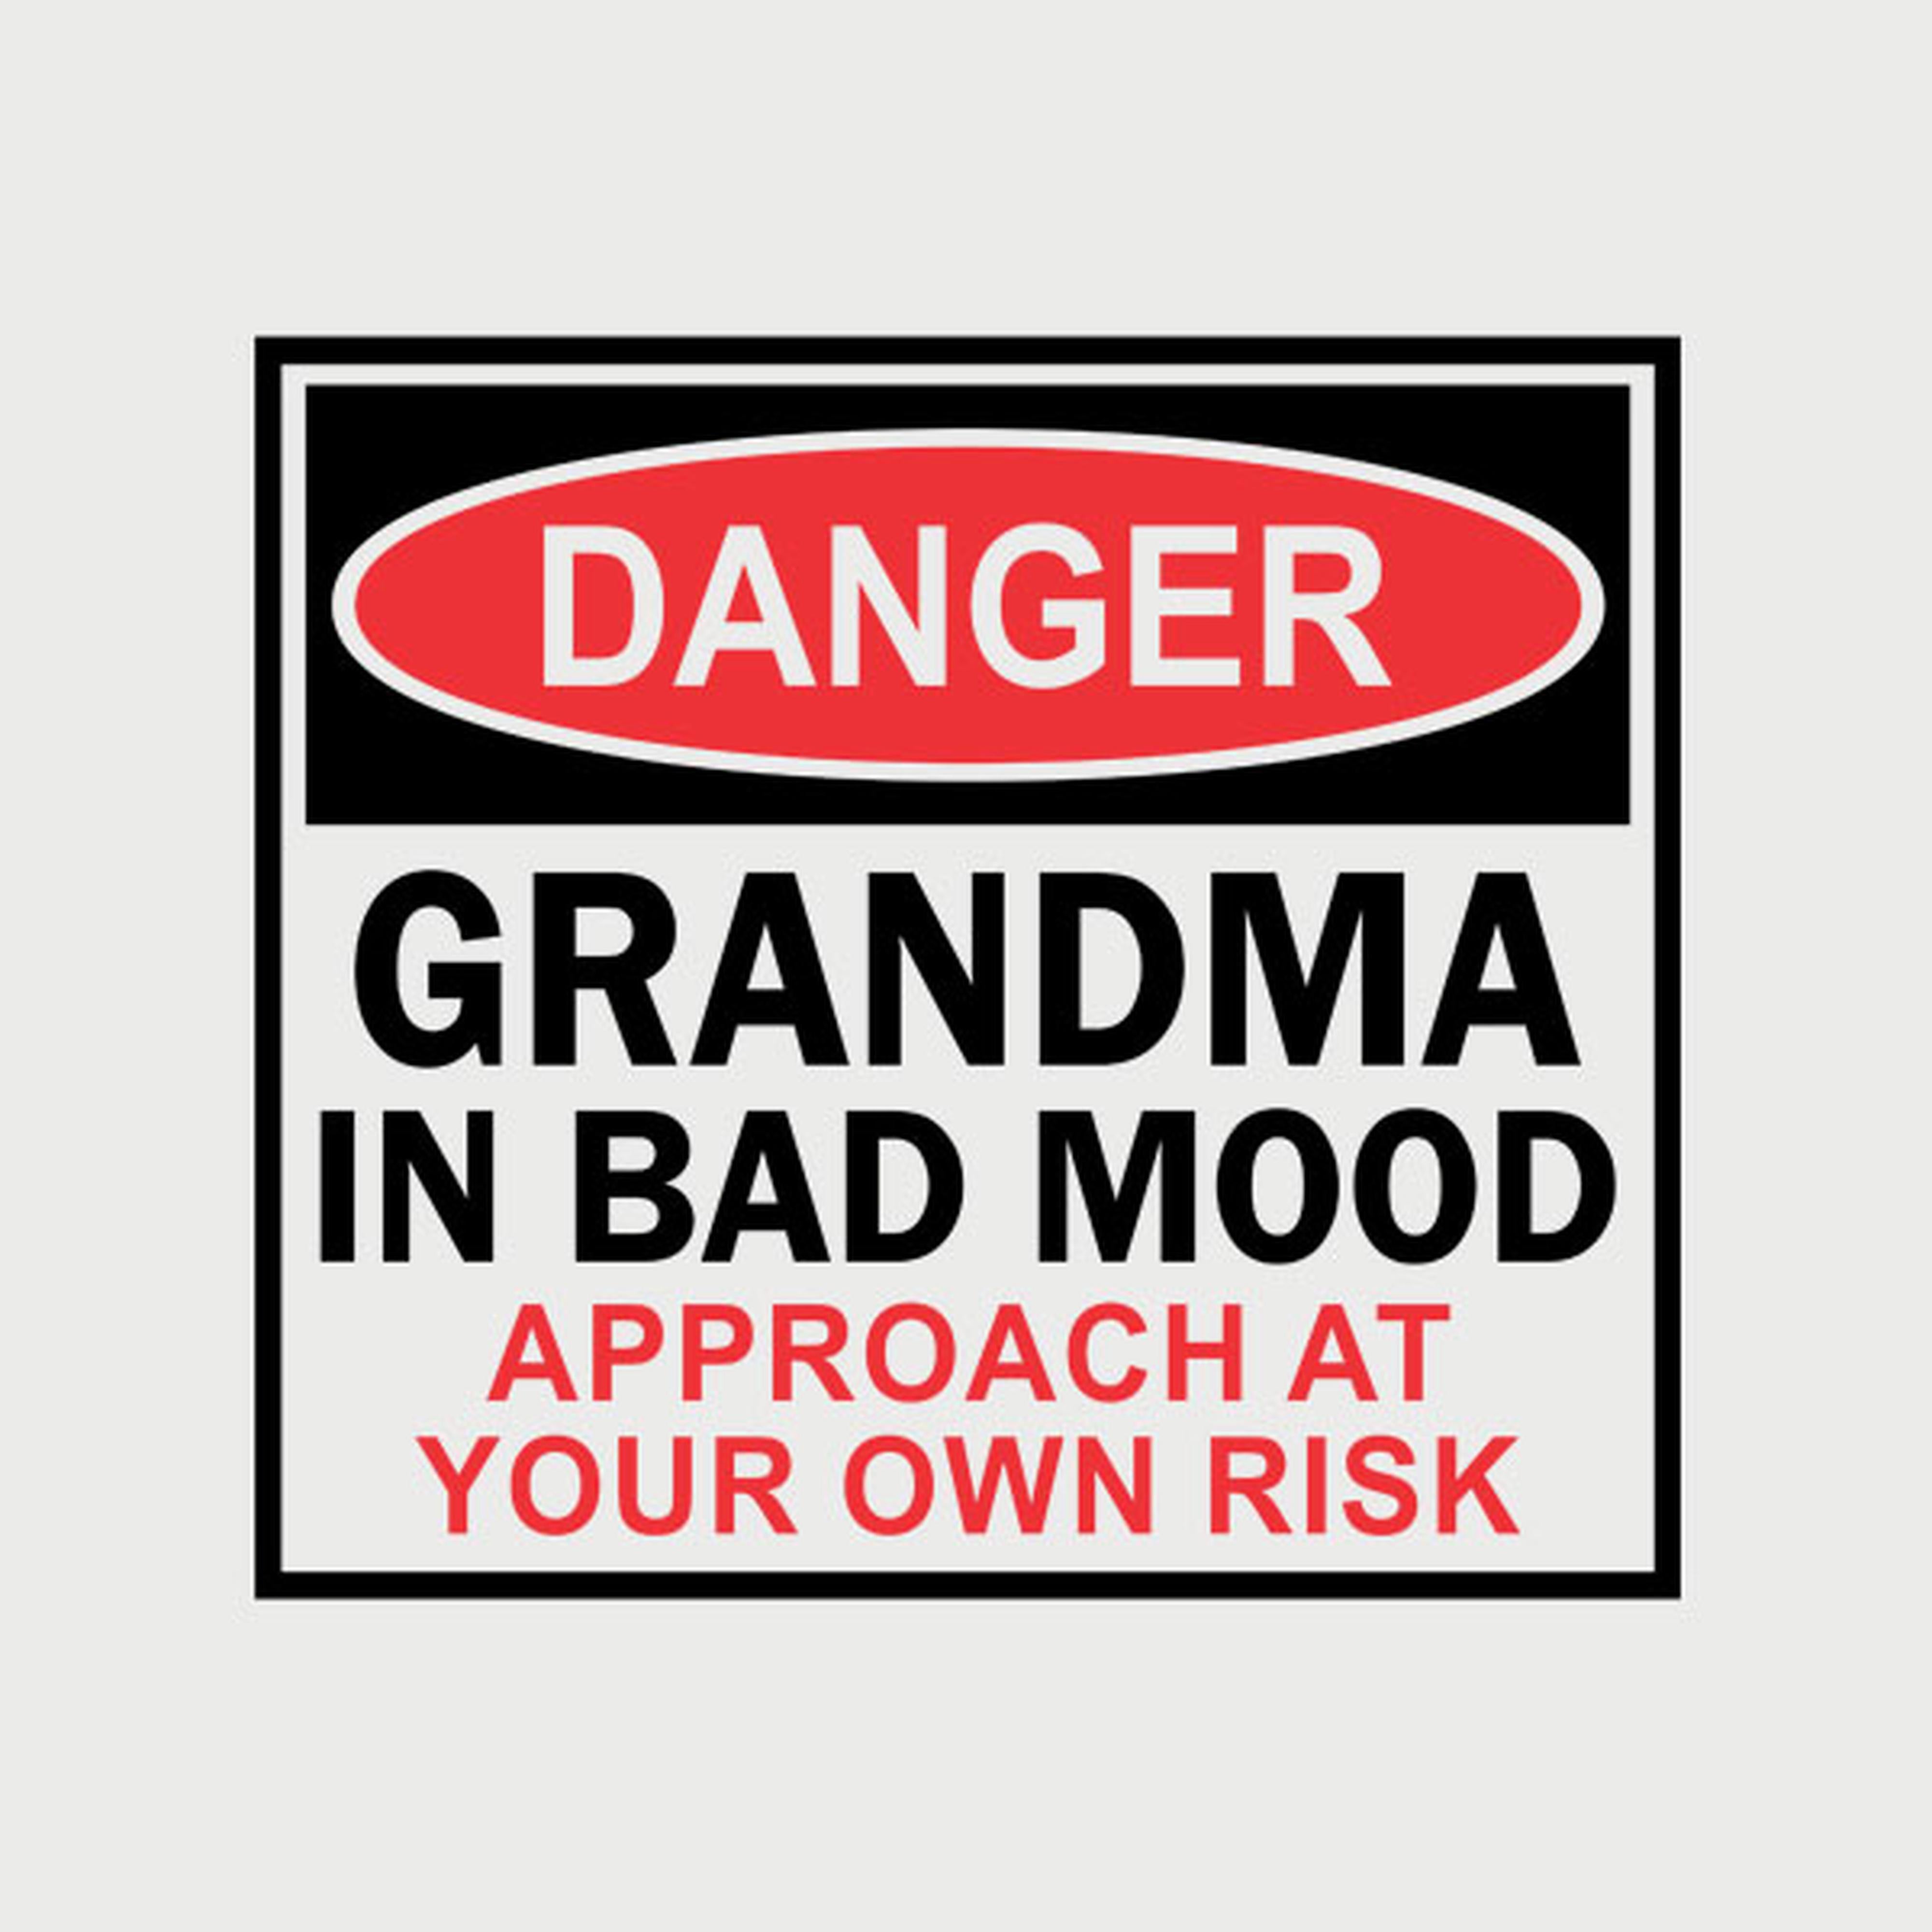 Grandma in bad mood